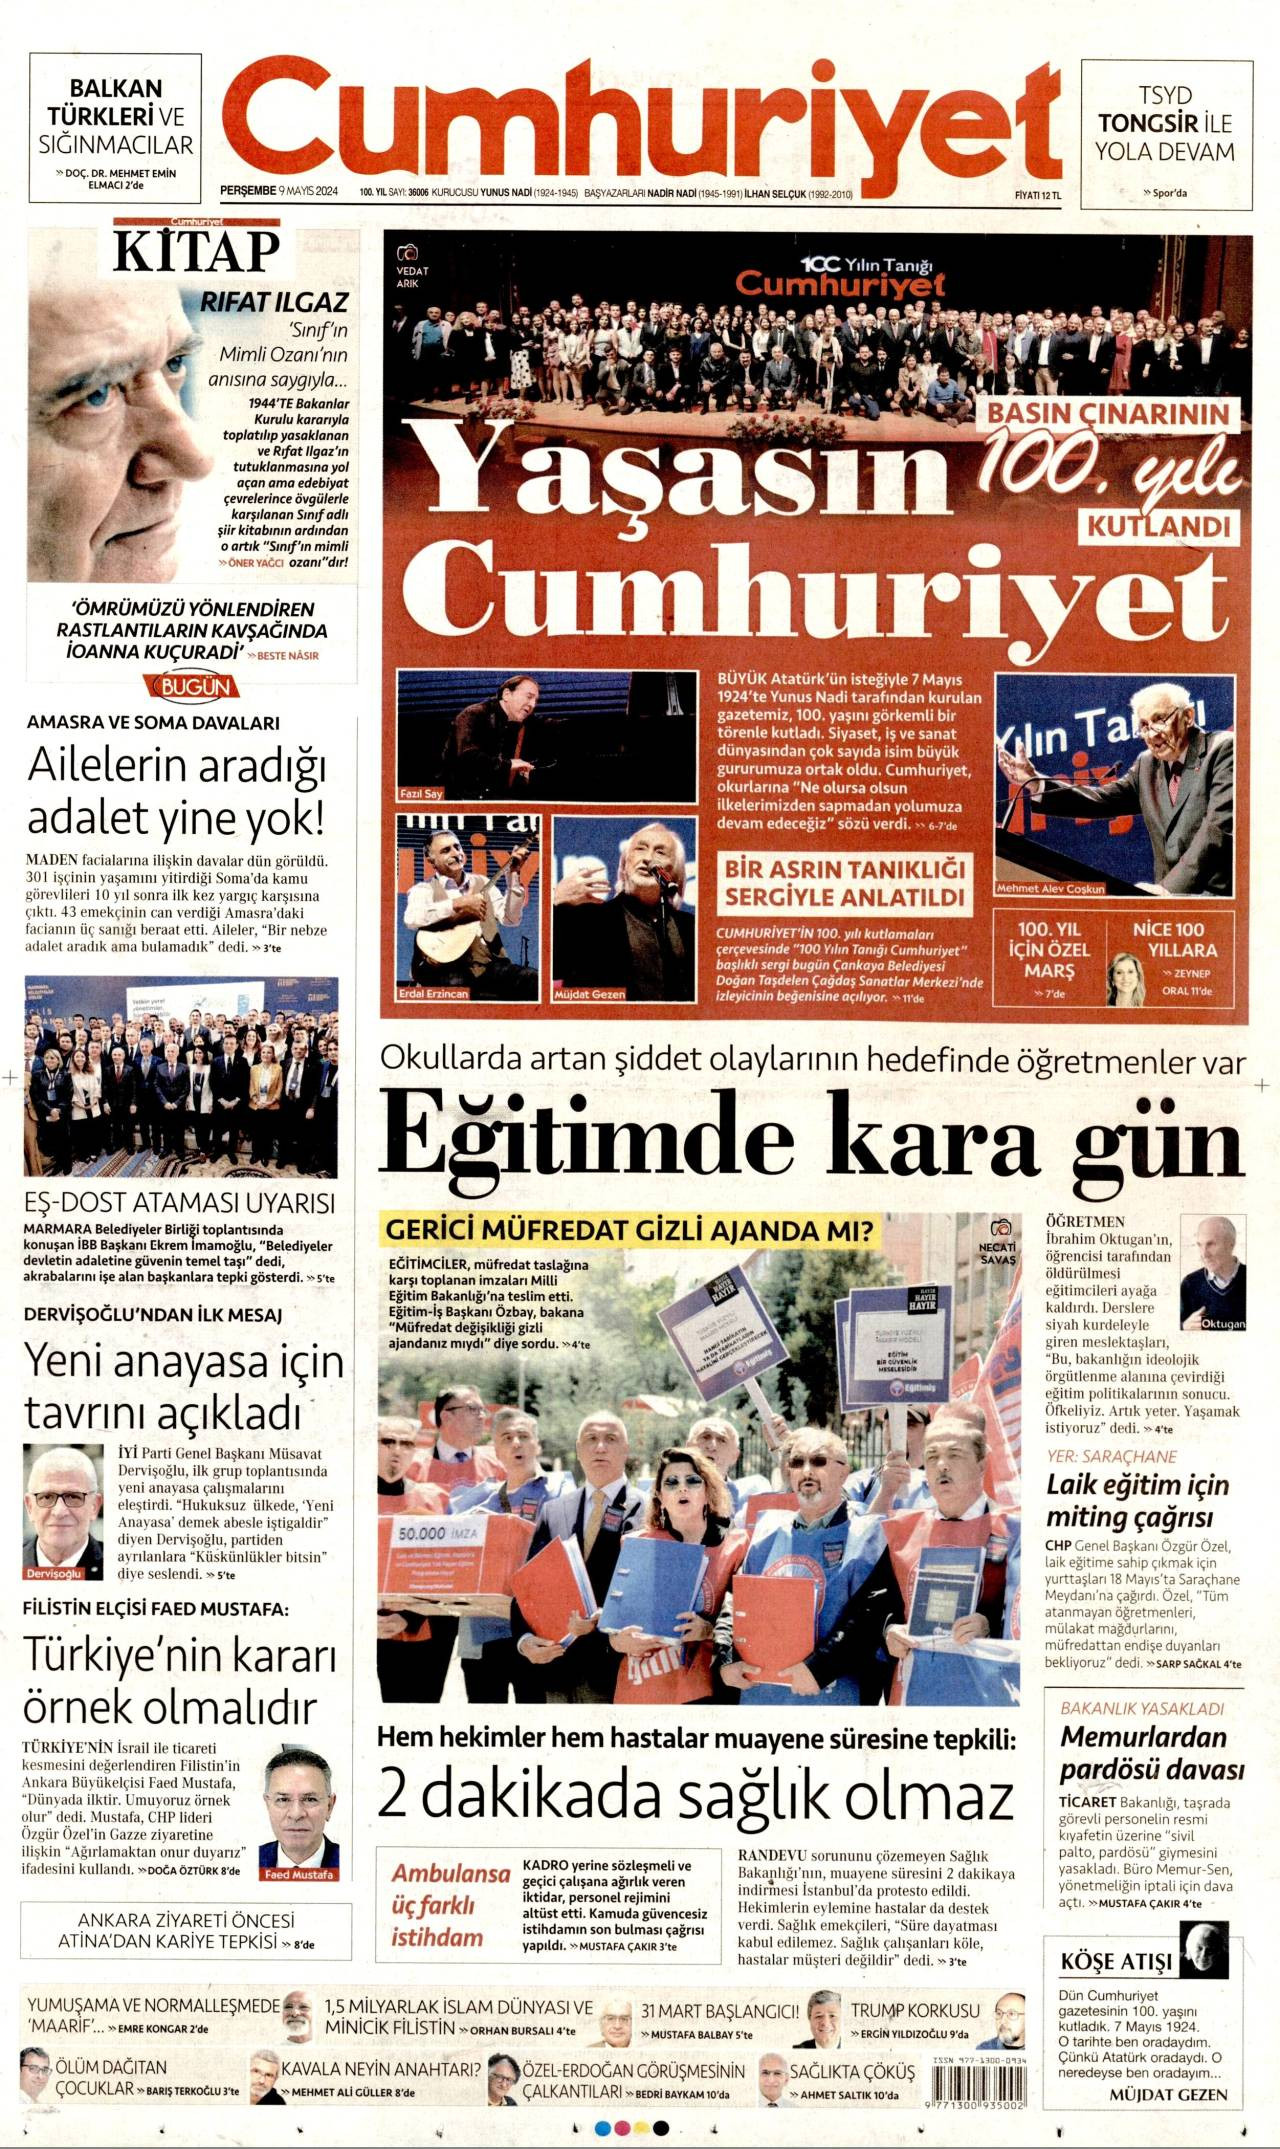 Cumhuriyet Gazetesi Gazetesi